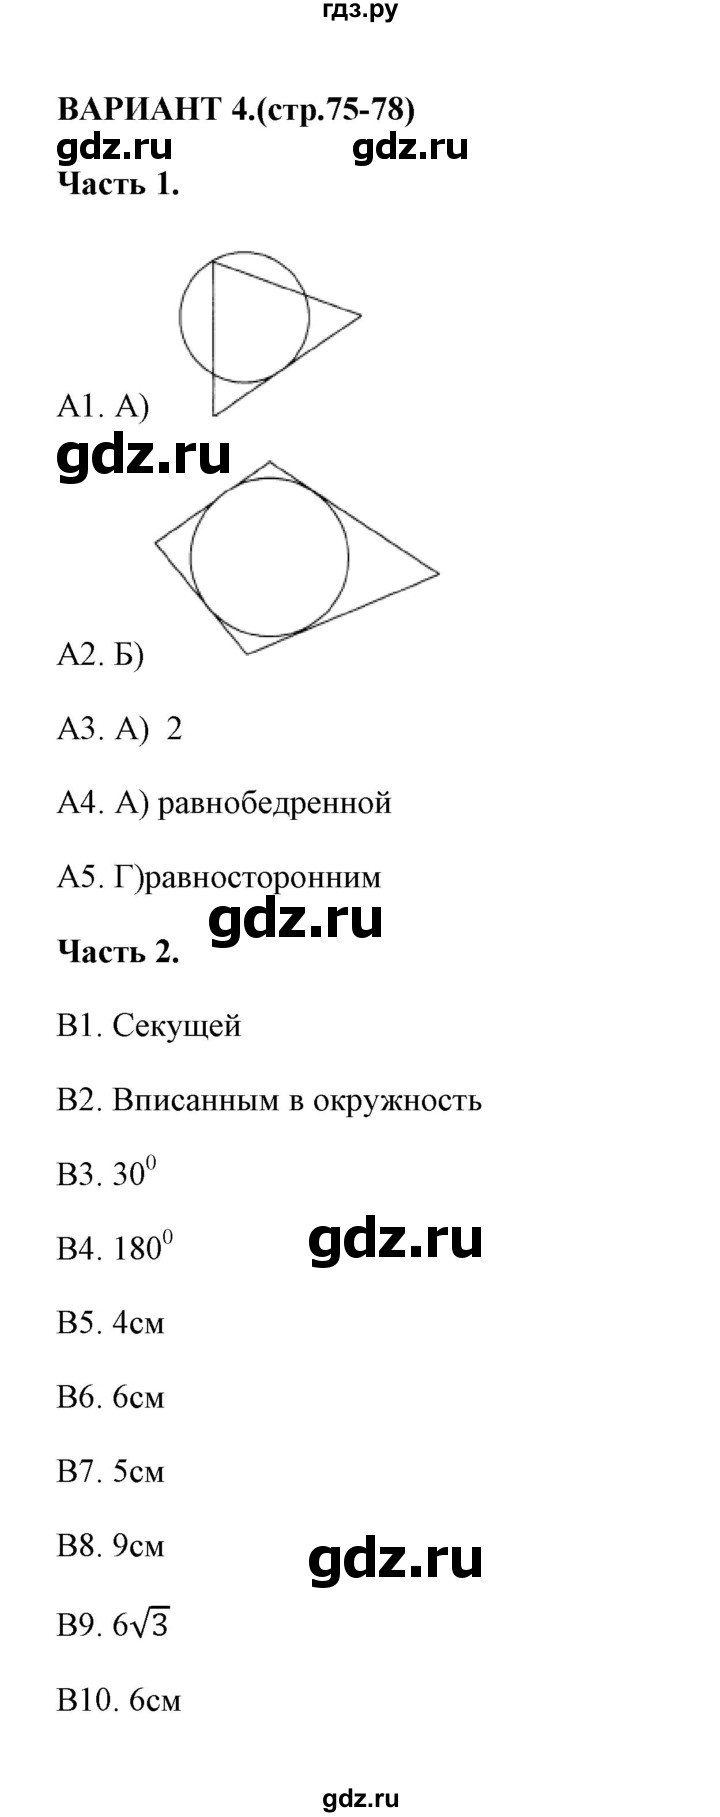 ГДЗ по геометрии 8 класс  Фарков тесты (к учебнику Атанасяна)  тест 4 (вариант) - 4, Решебник